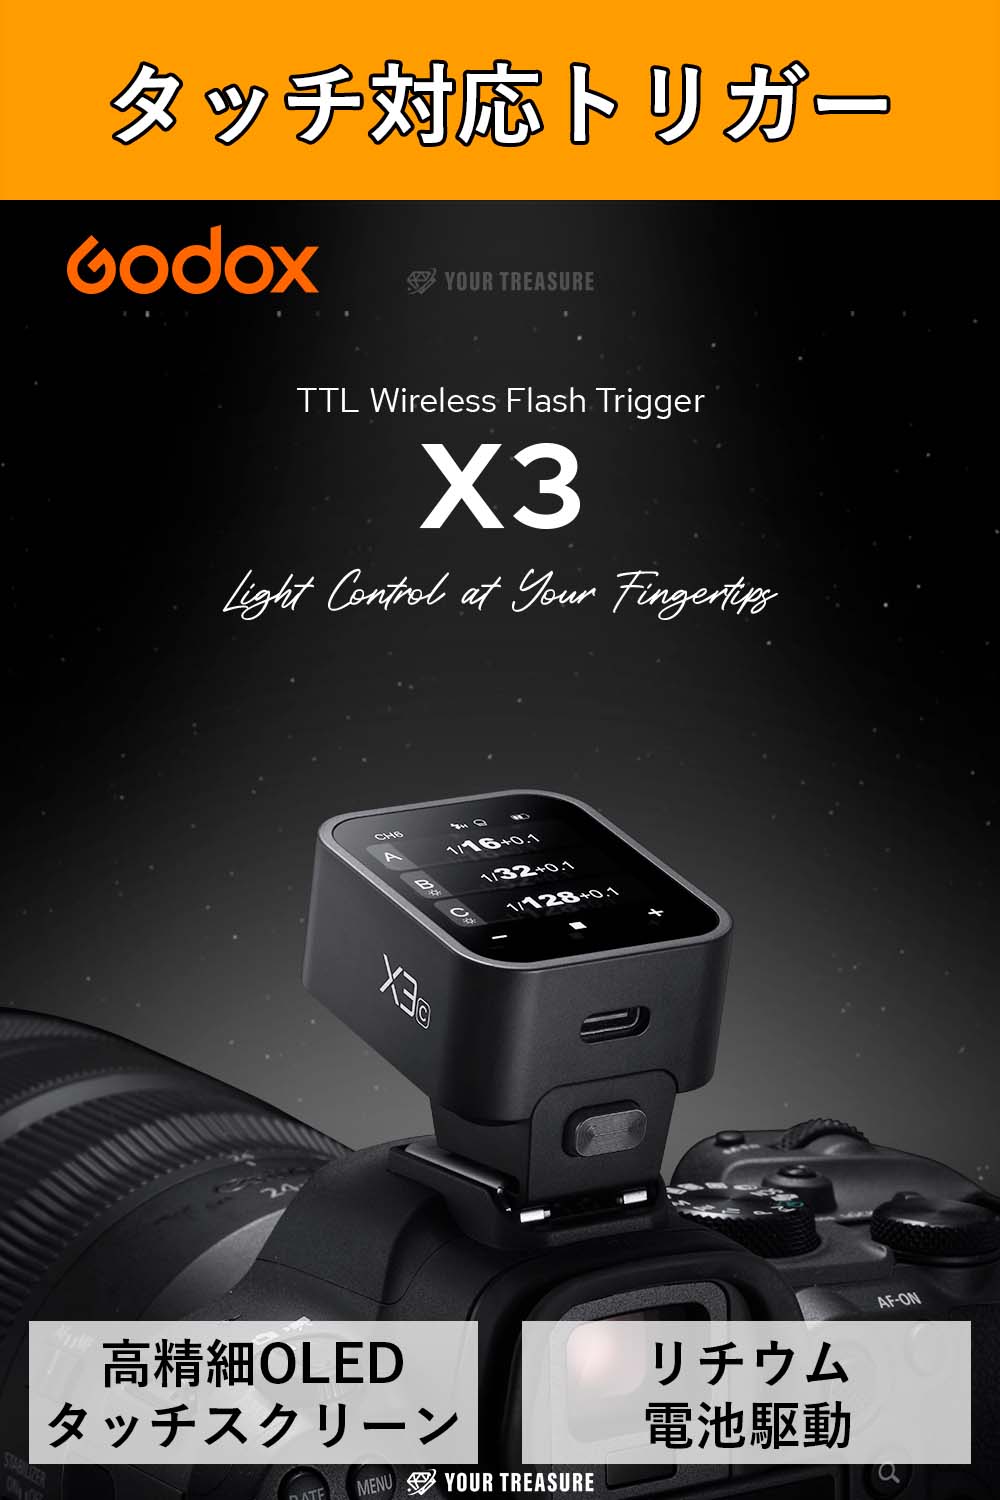 godox ストロボ とワイヤレス送信機 - カメラ